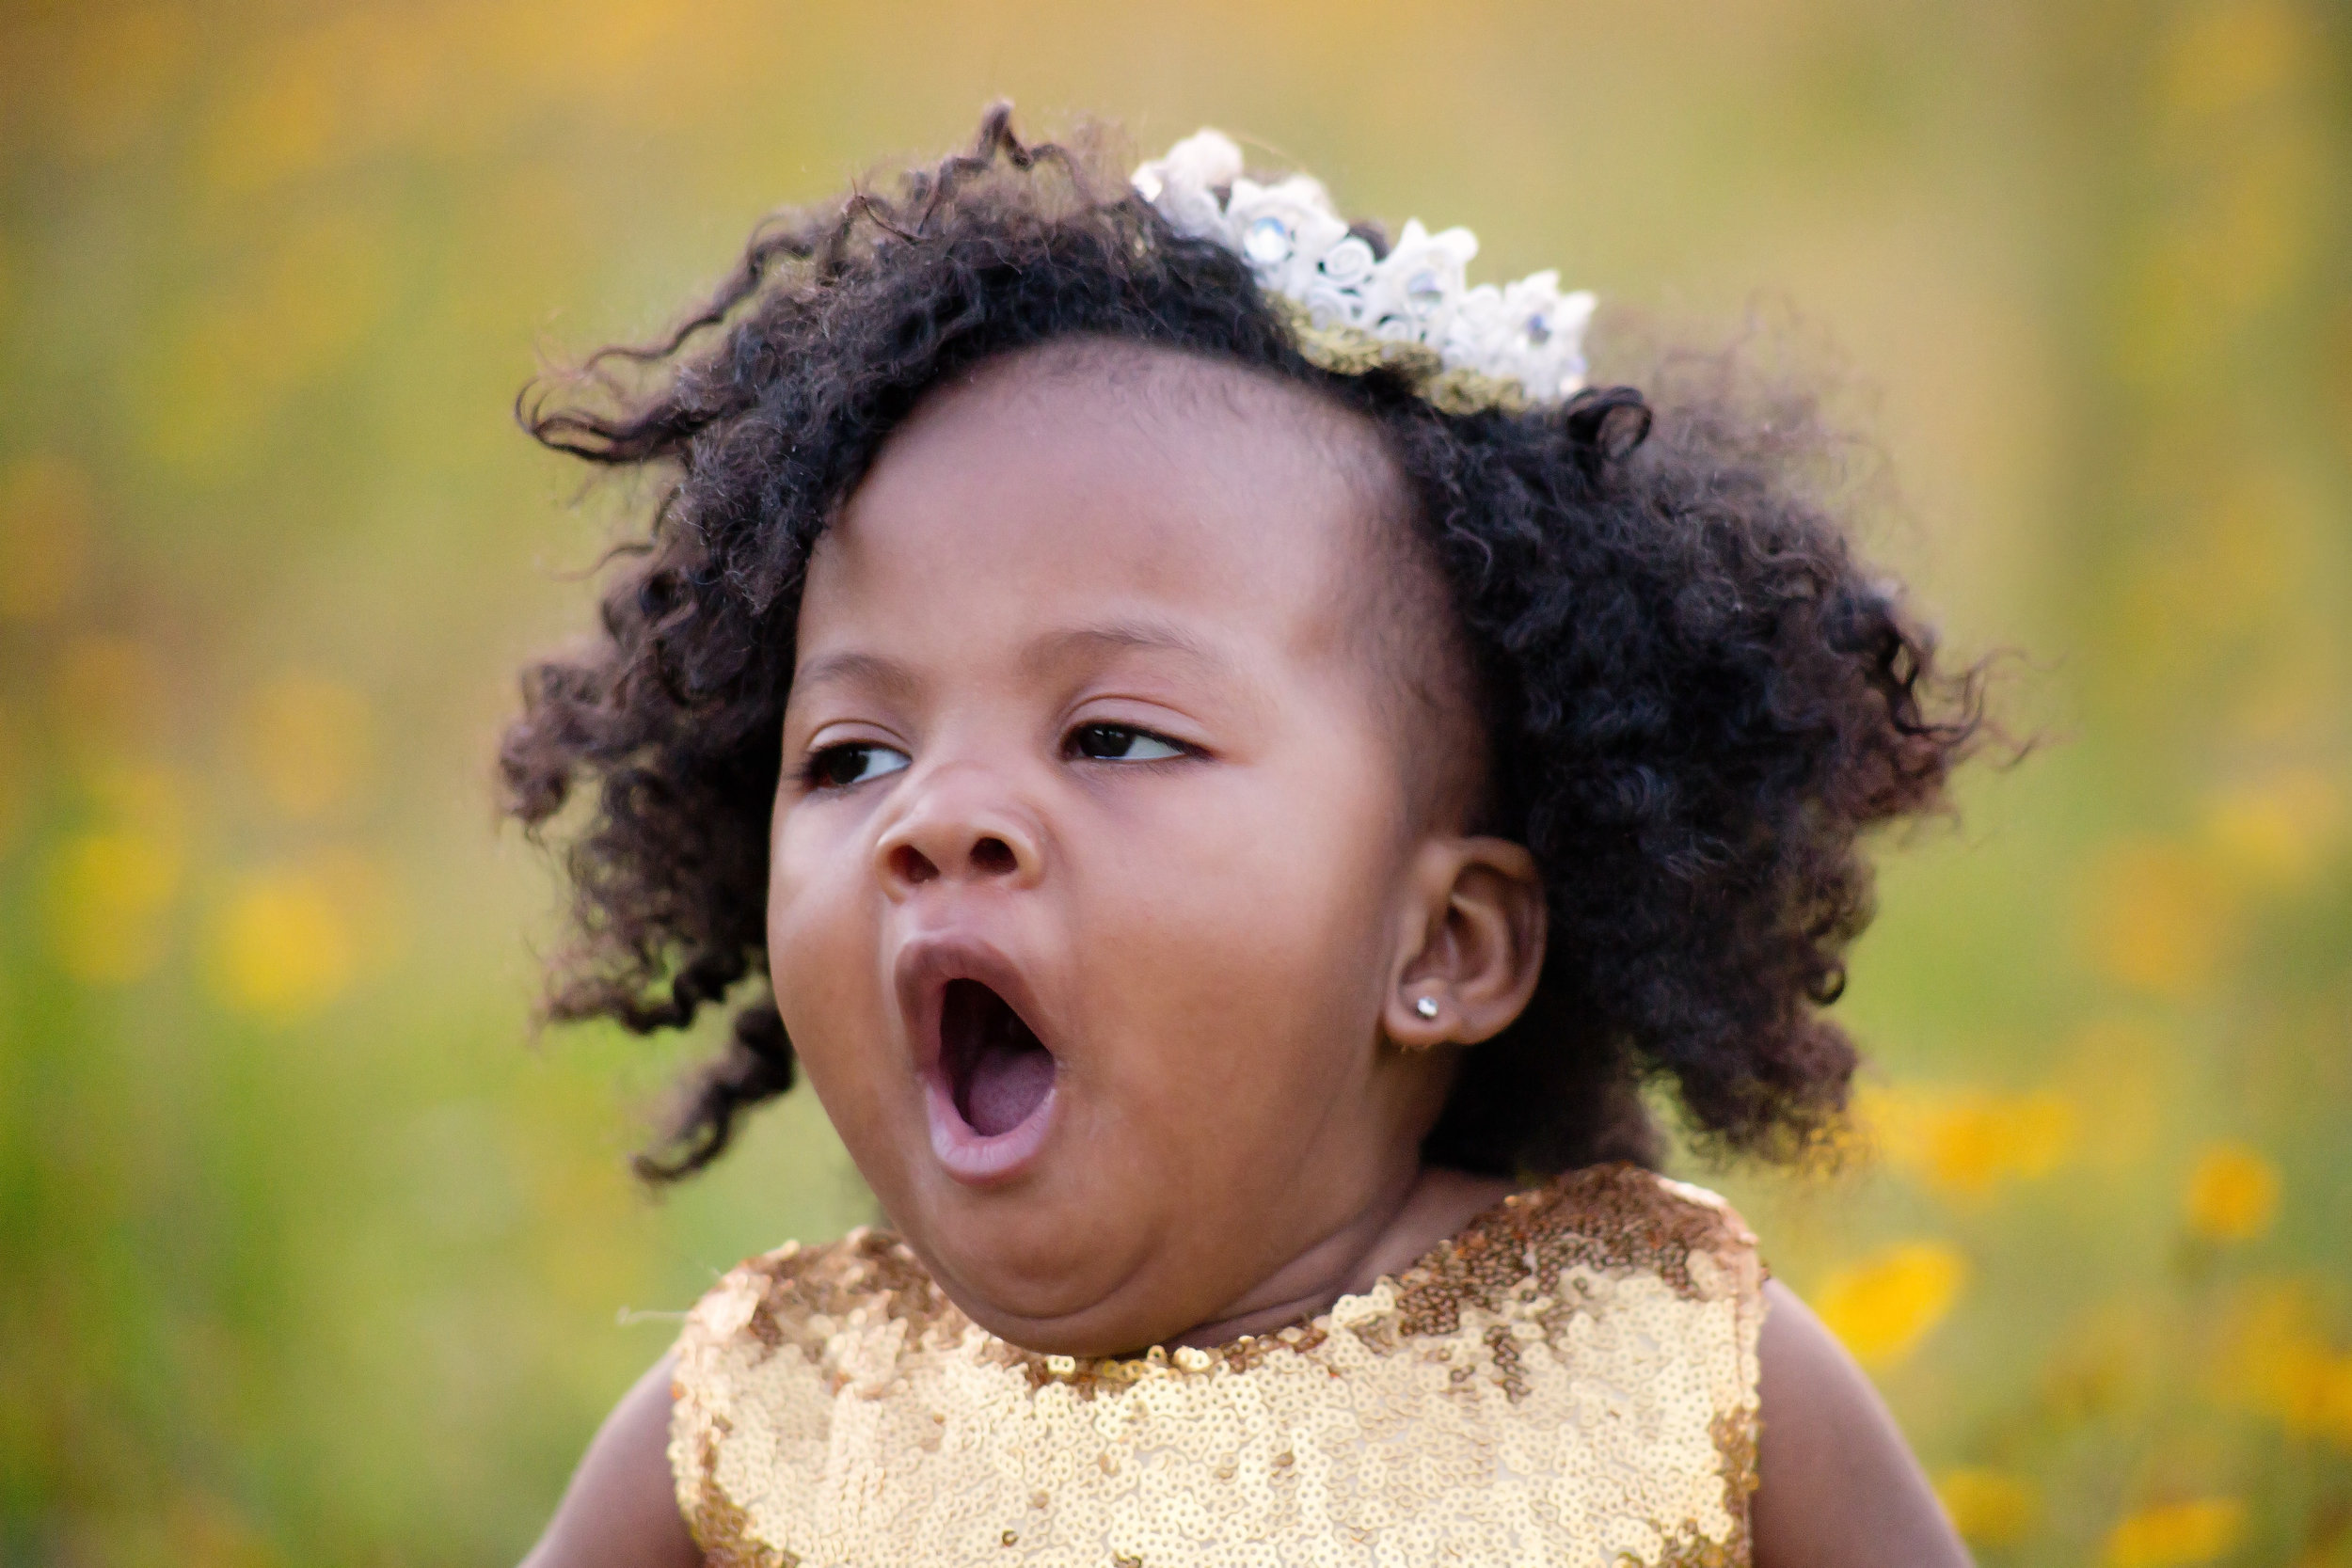 Little girl yawning Nashville tennessee